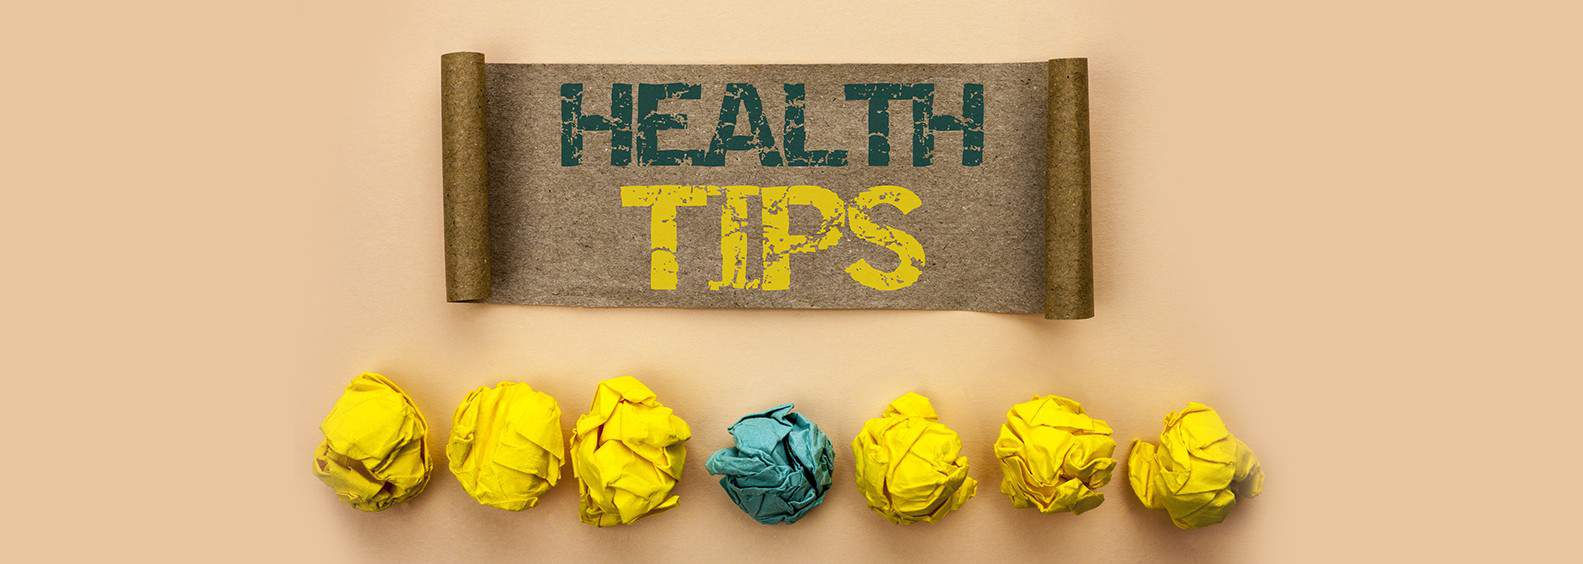 health tips to follow at 30